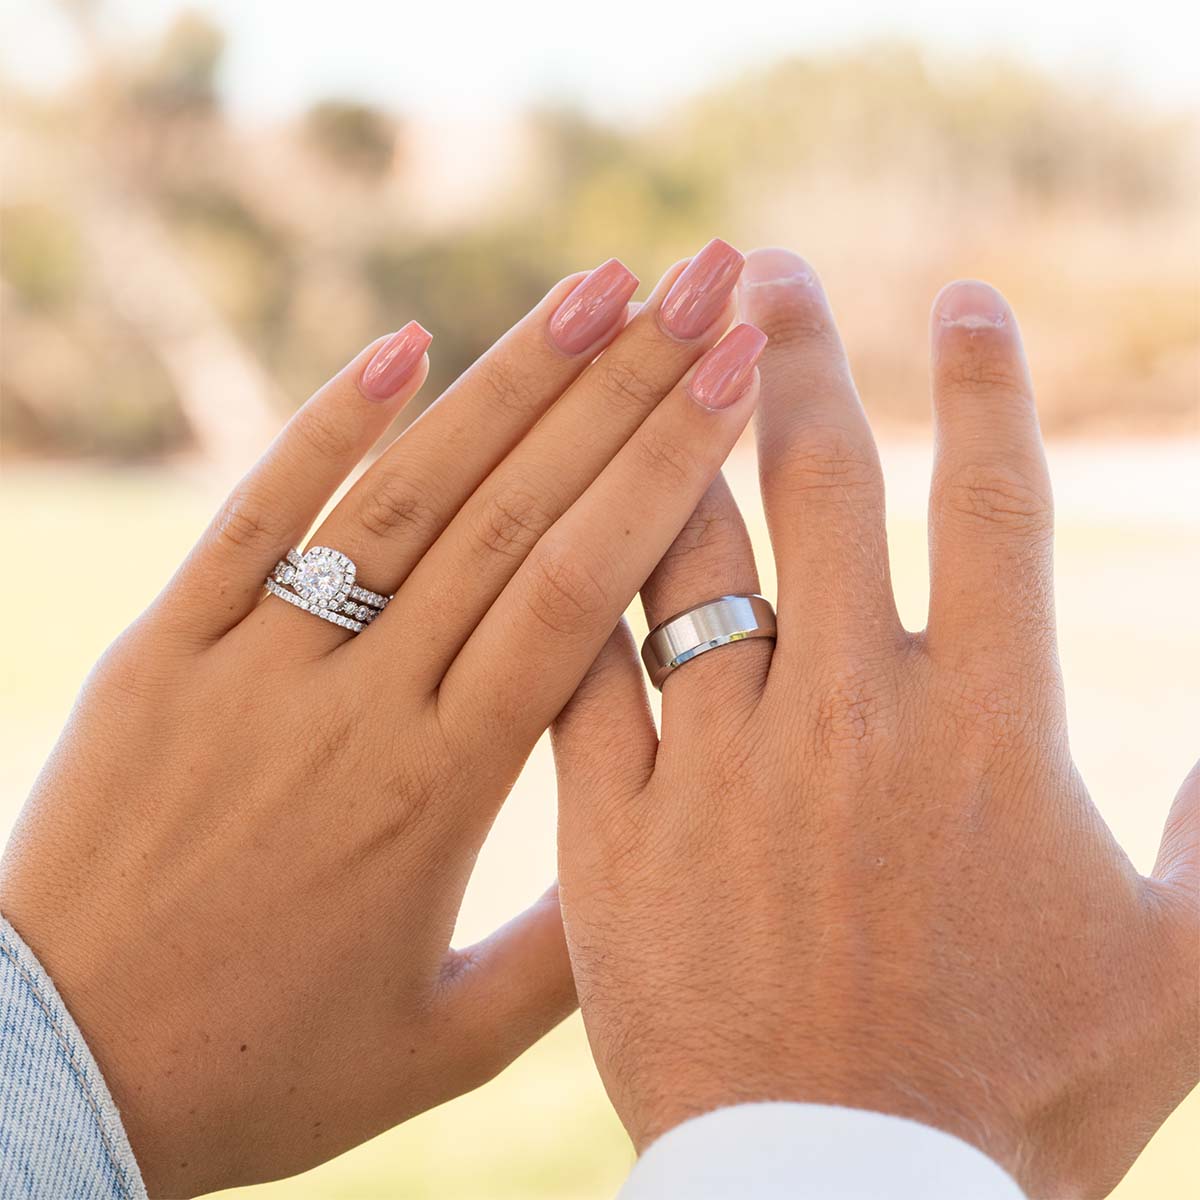 Couple wearing silver wedding rings